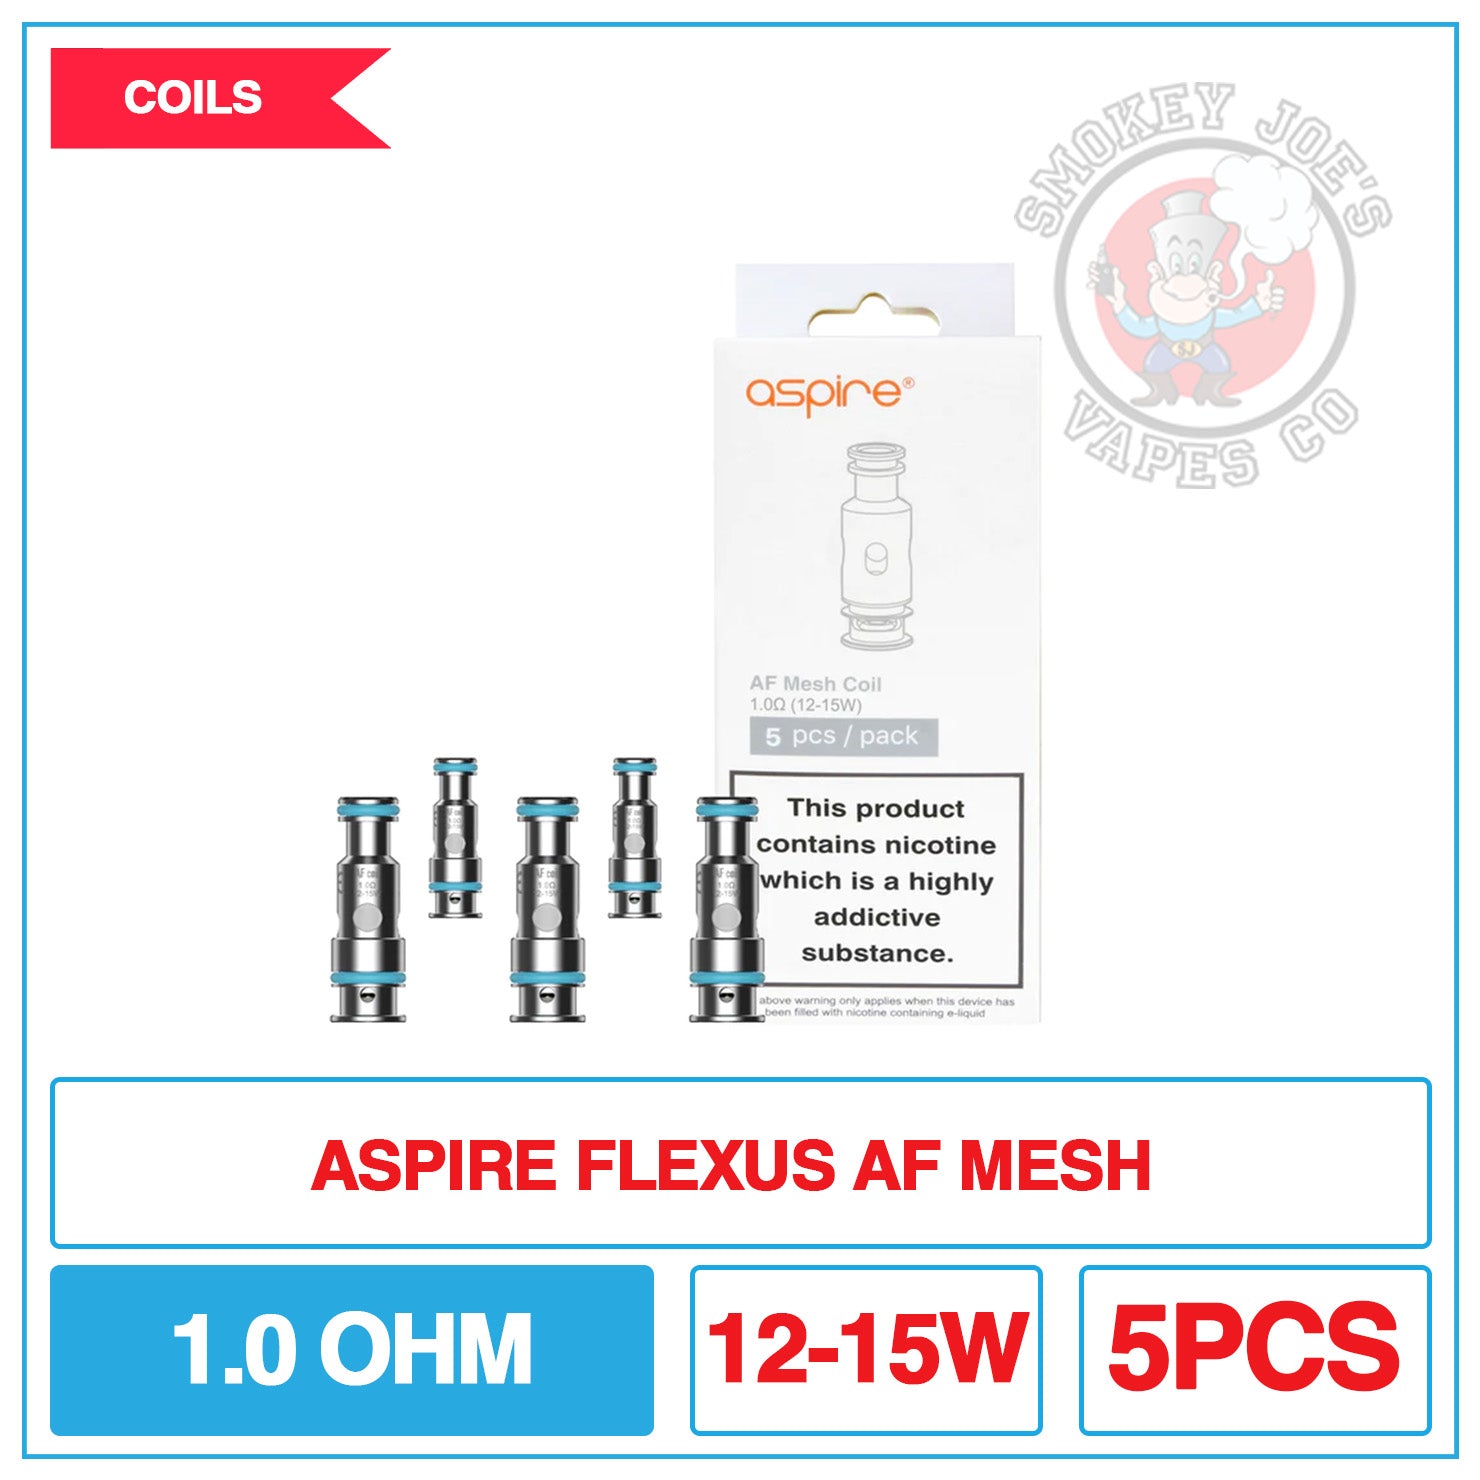 Aspire Flexus AF Mesh 1.0 Replacement Coils 5PCS | Smokey Joes Vapes Co